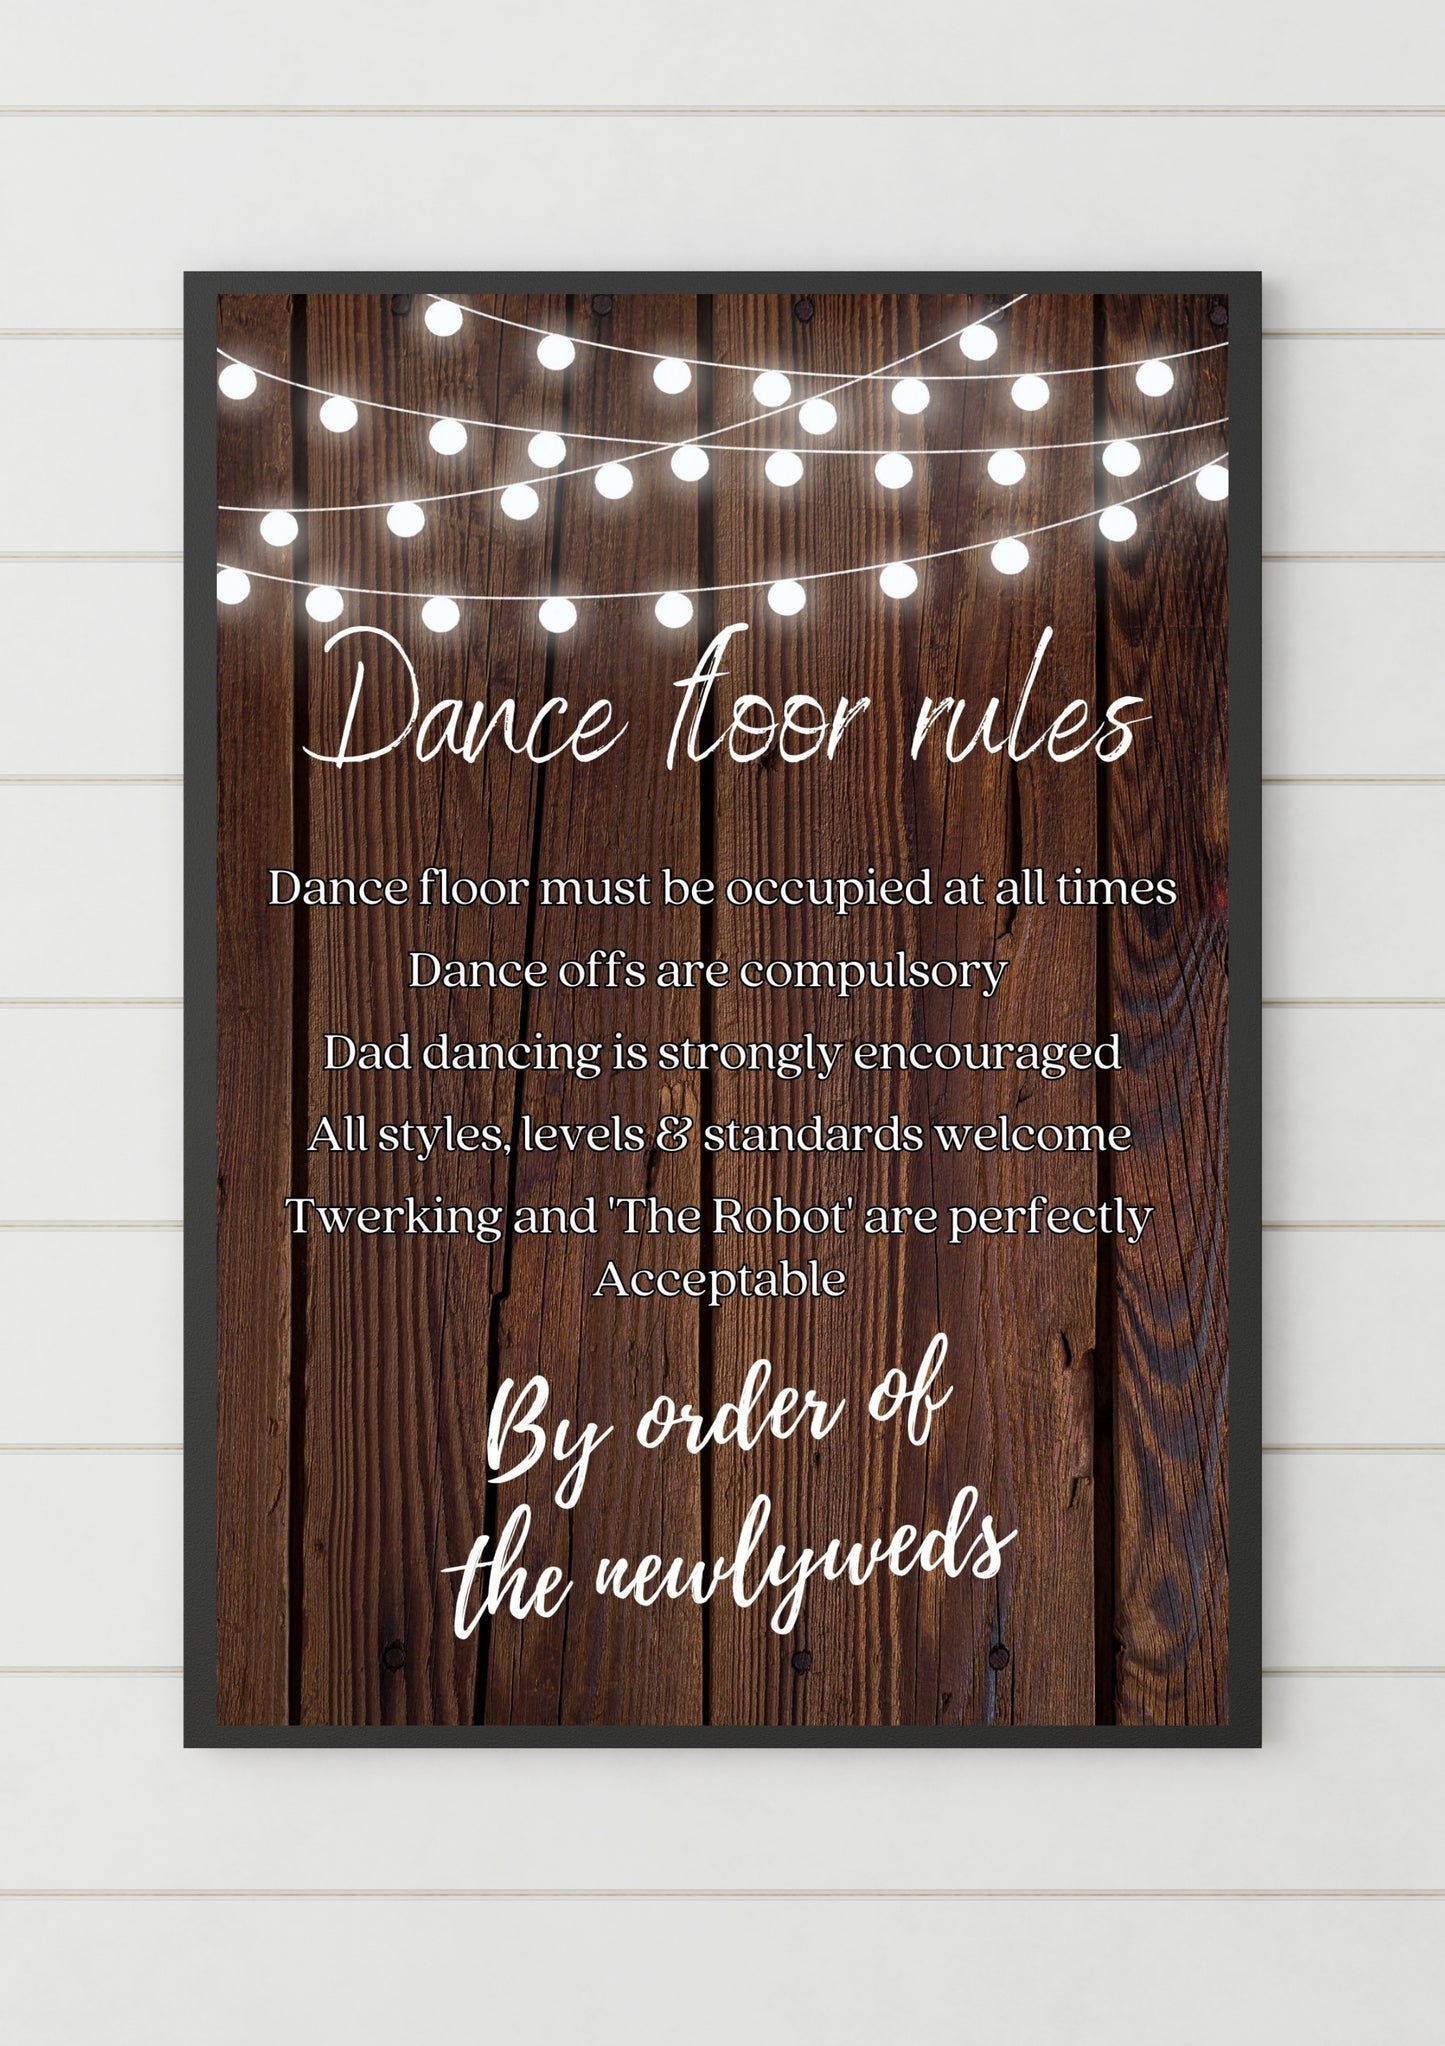 Dance floor rules sign